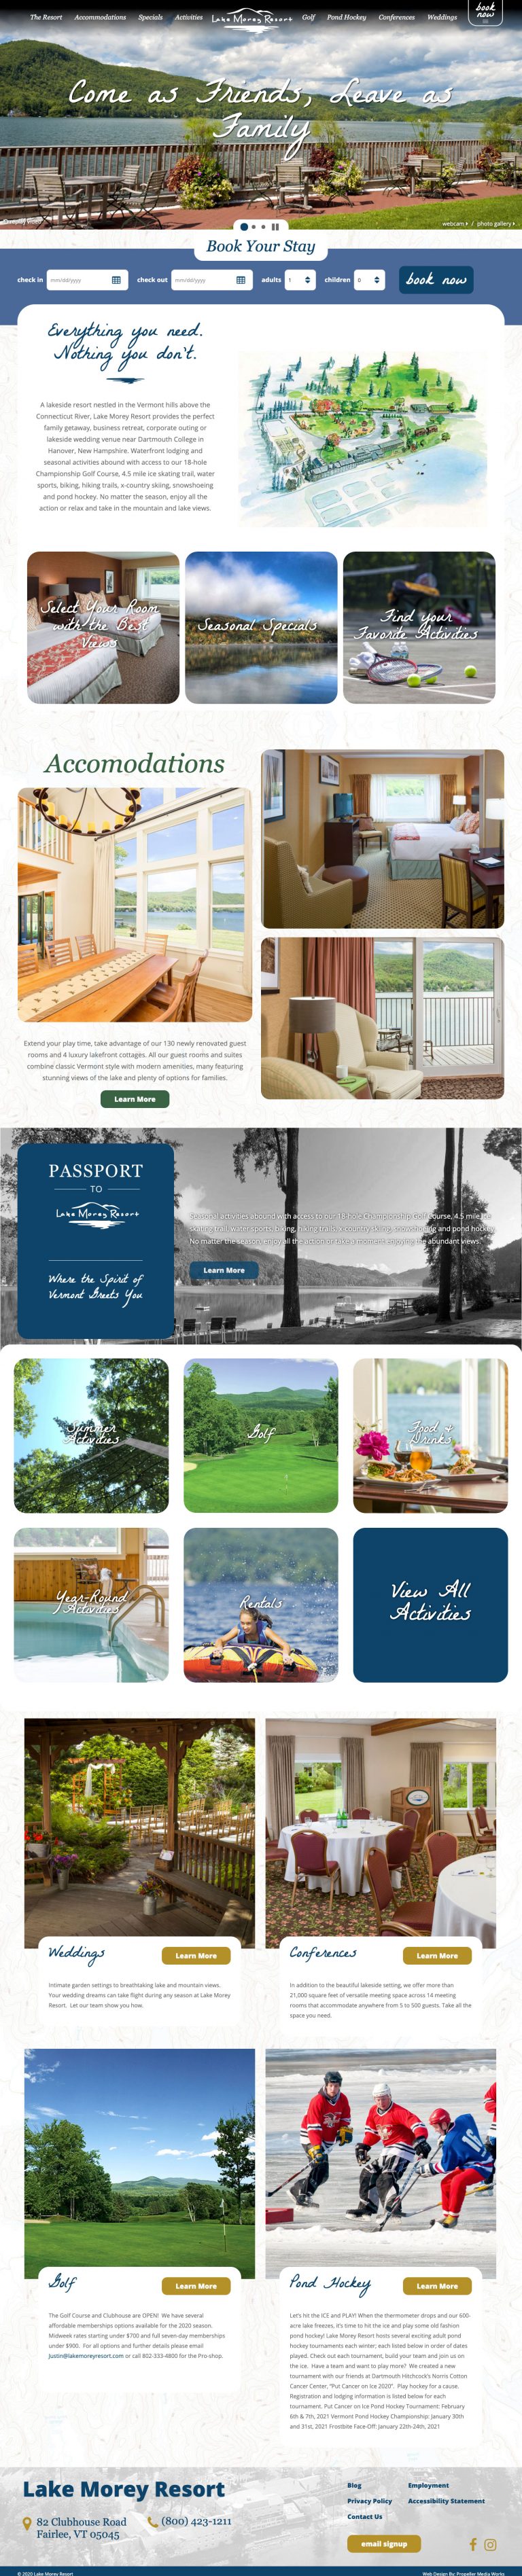 Lake Morey Resort Homepage Desktop Design